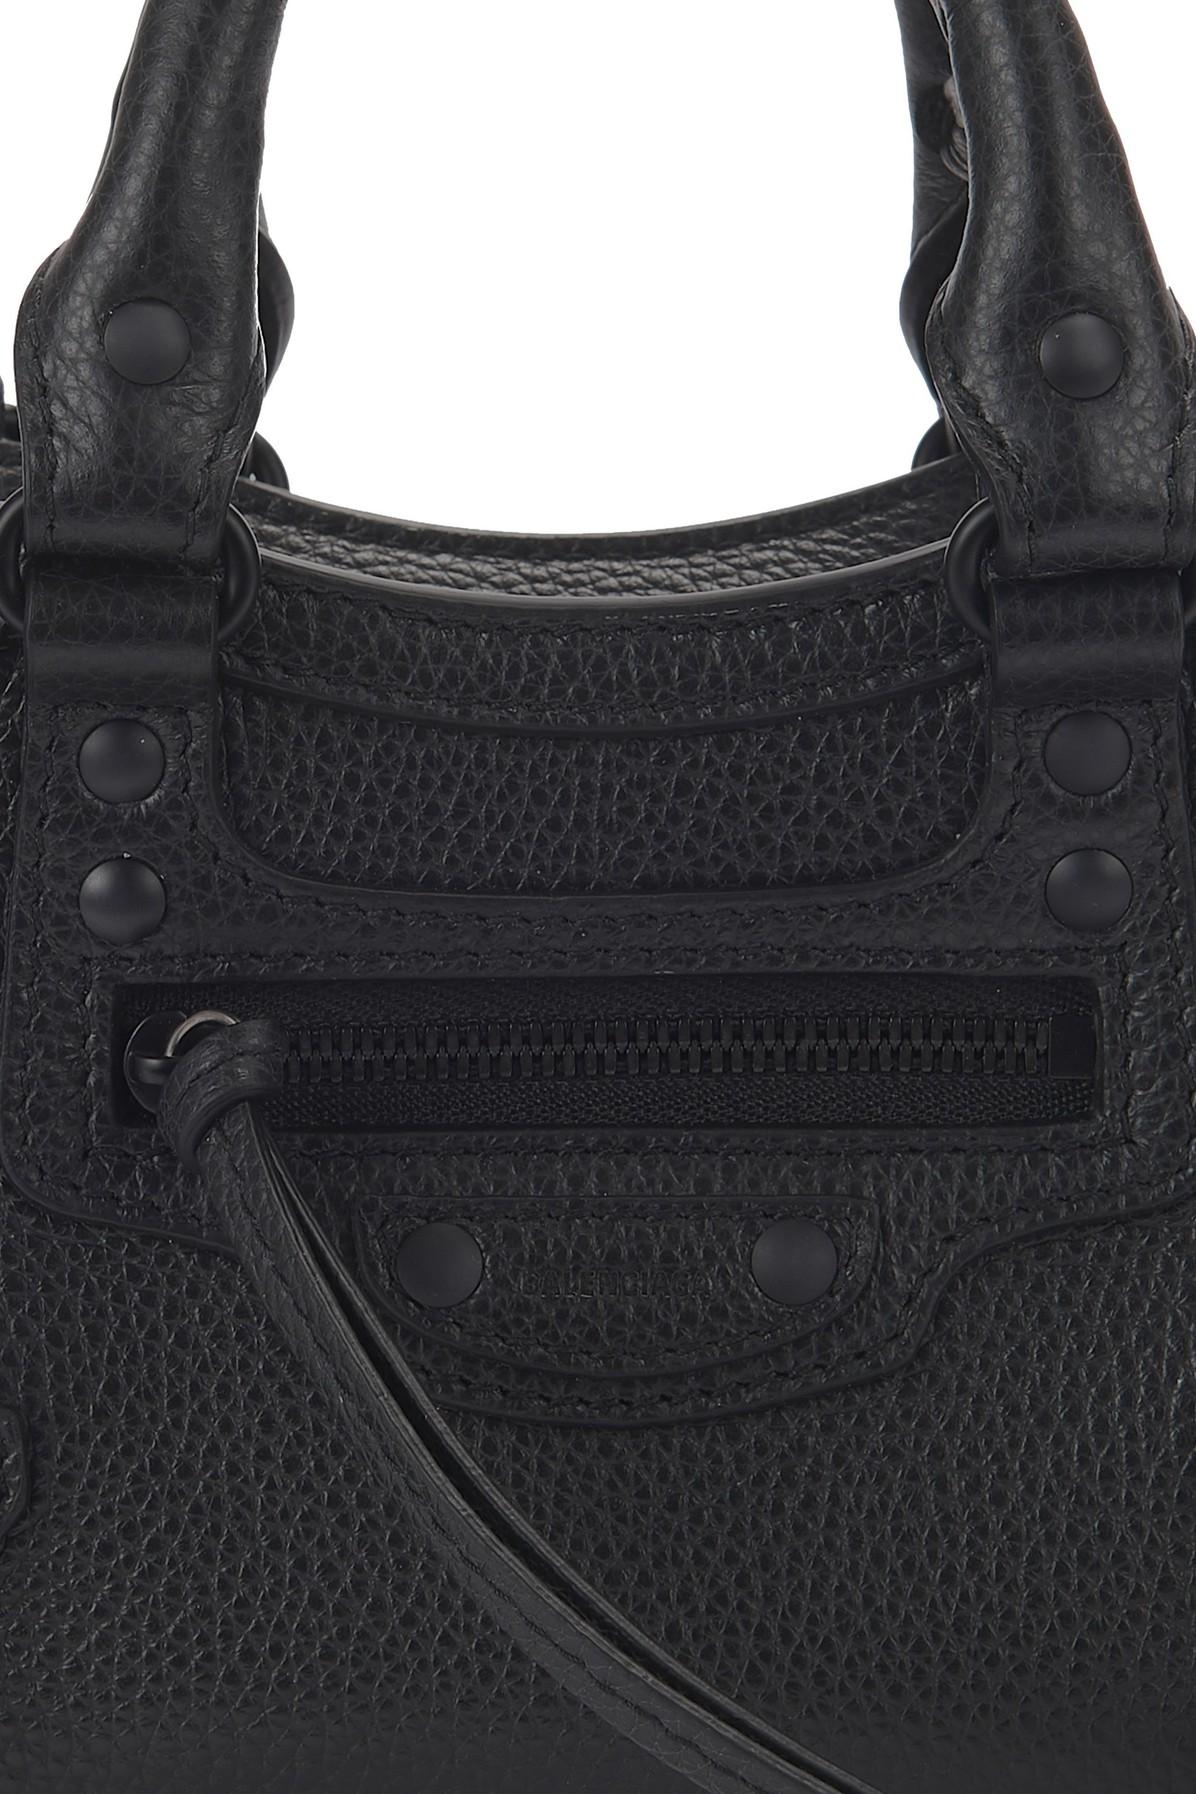 Balenciaga Neo Classic Nano Top Handle Bag in Black - Lyst